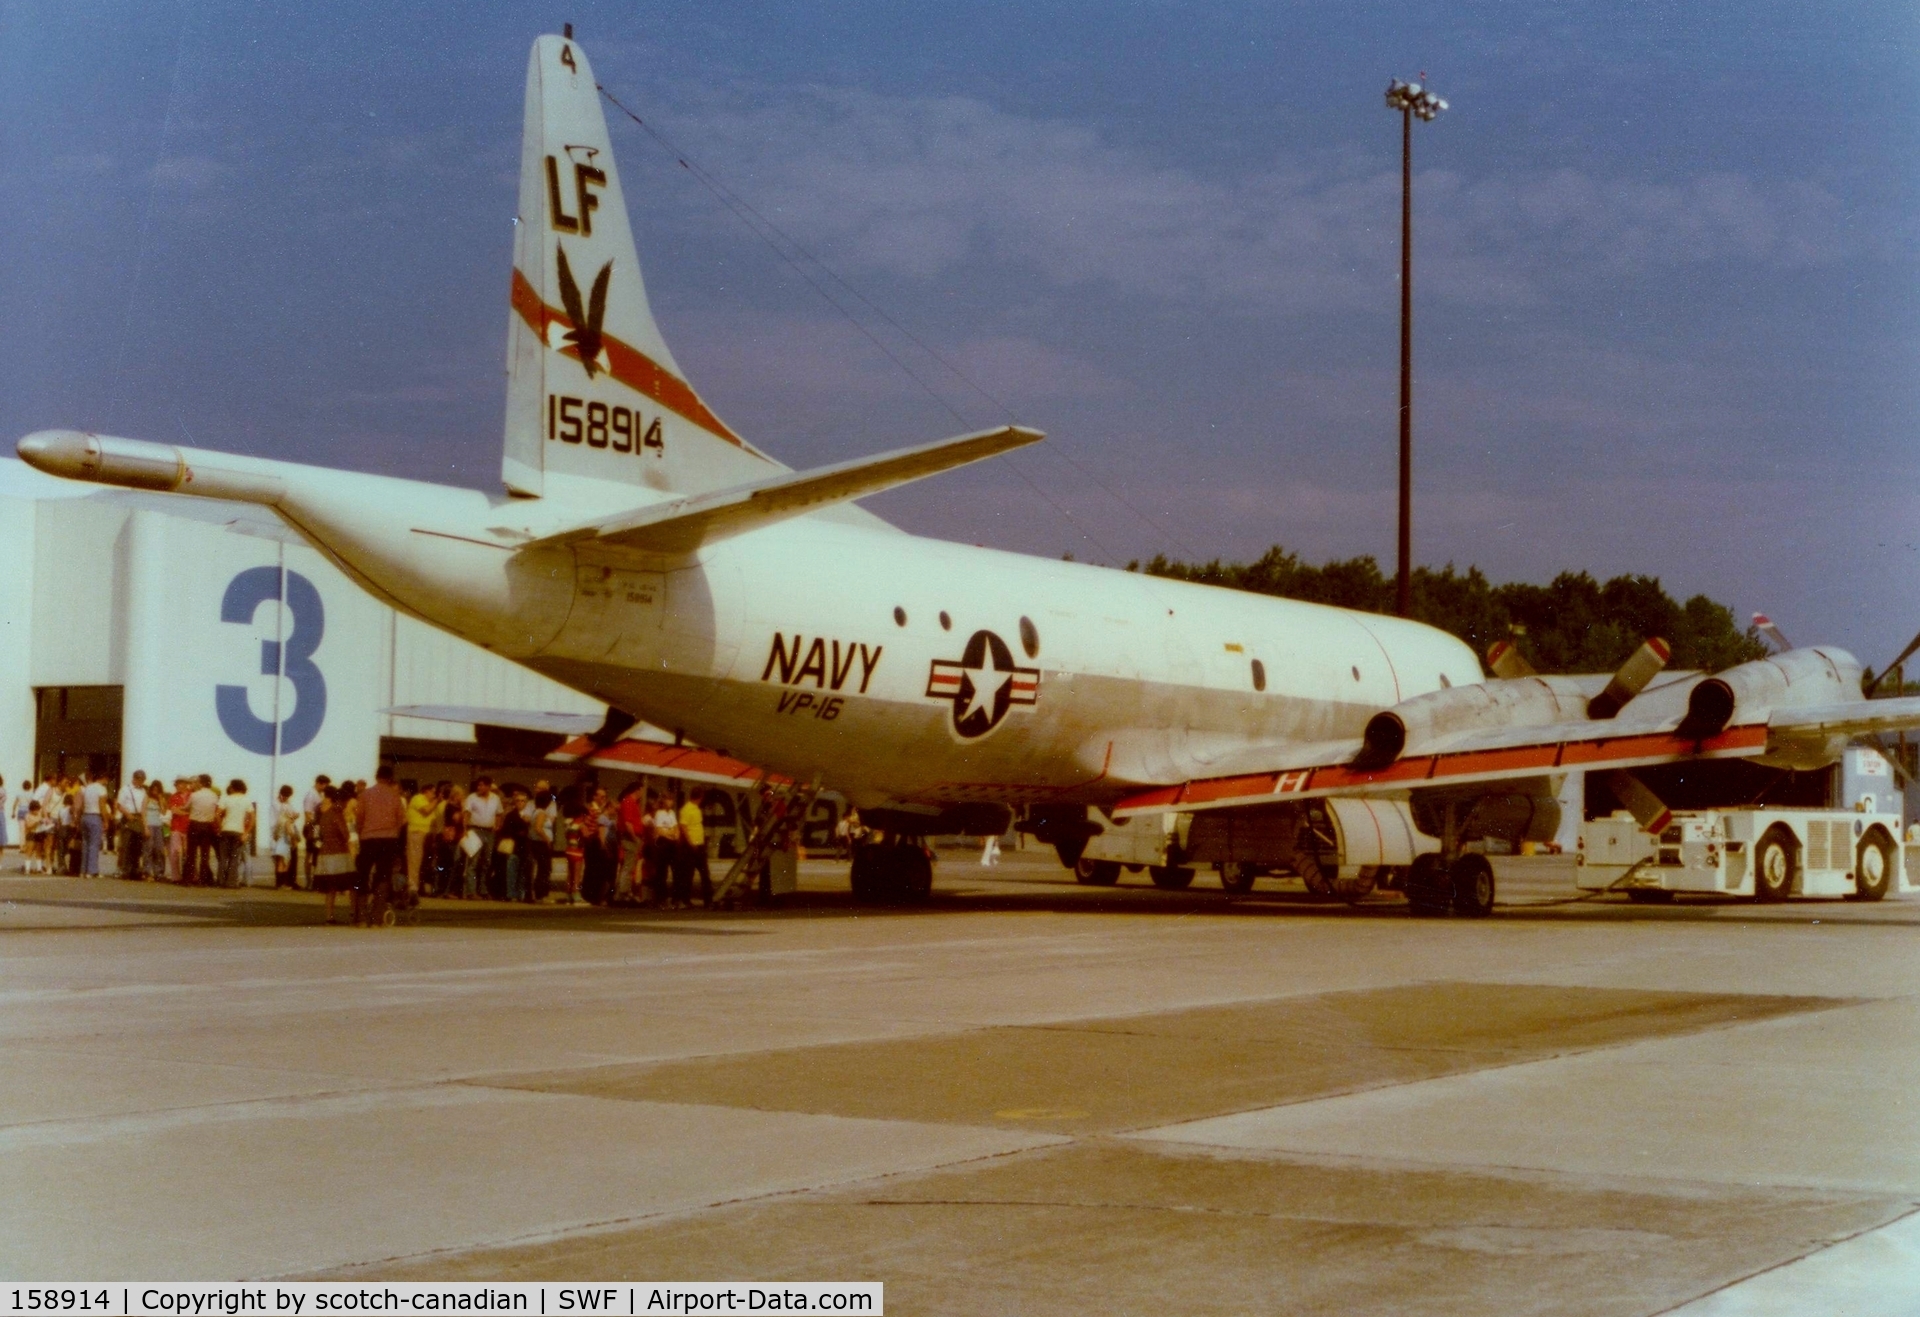 158914, Lockheed P-3C Orion C/N 285A-5586, Lockheed P-3C Orion SN: 158914 at Stewart International Airport, Newburgh, NY - circa 1970's